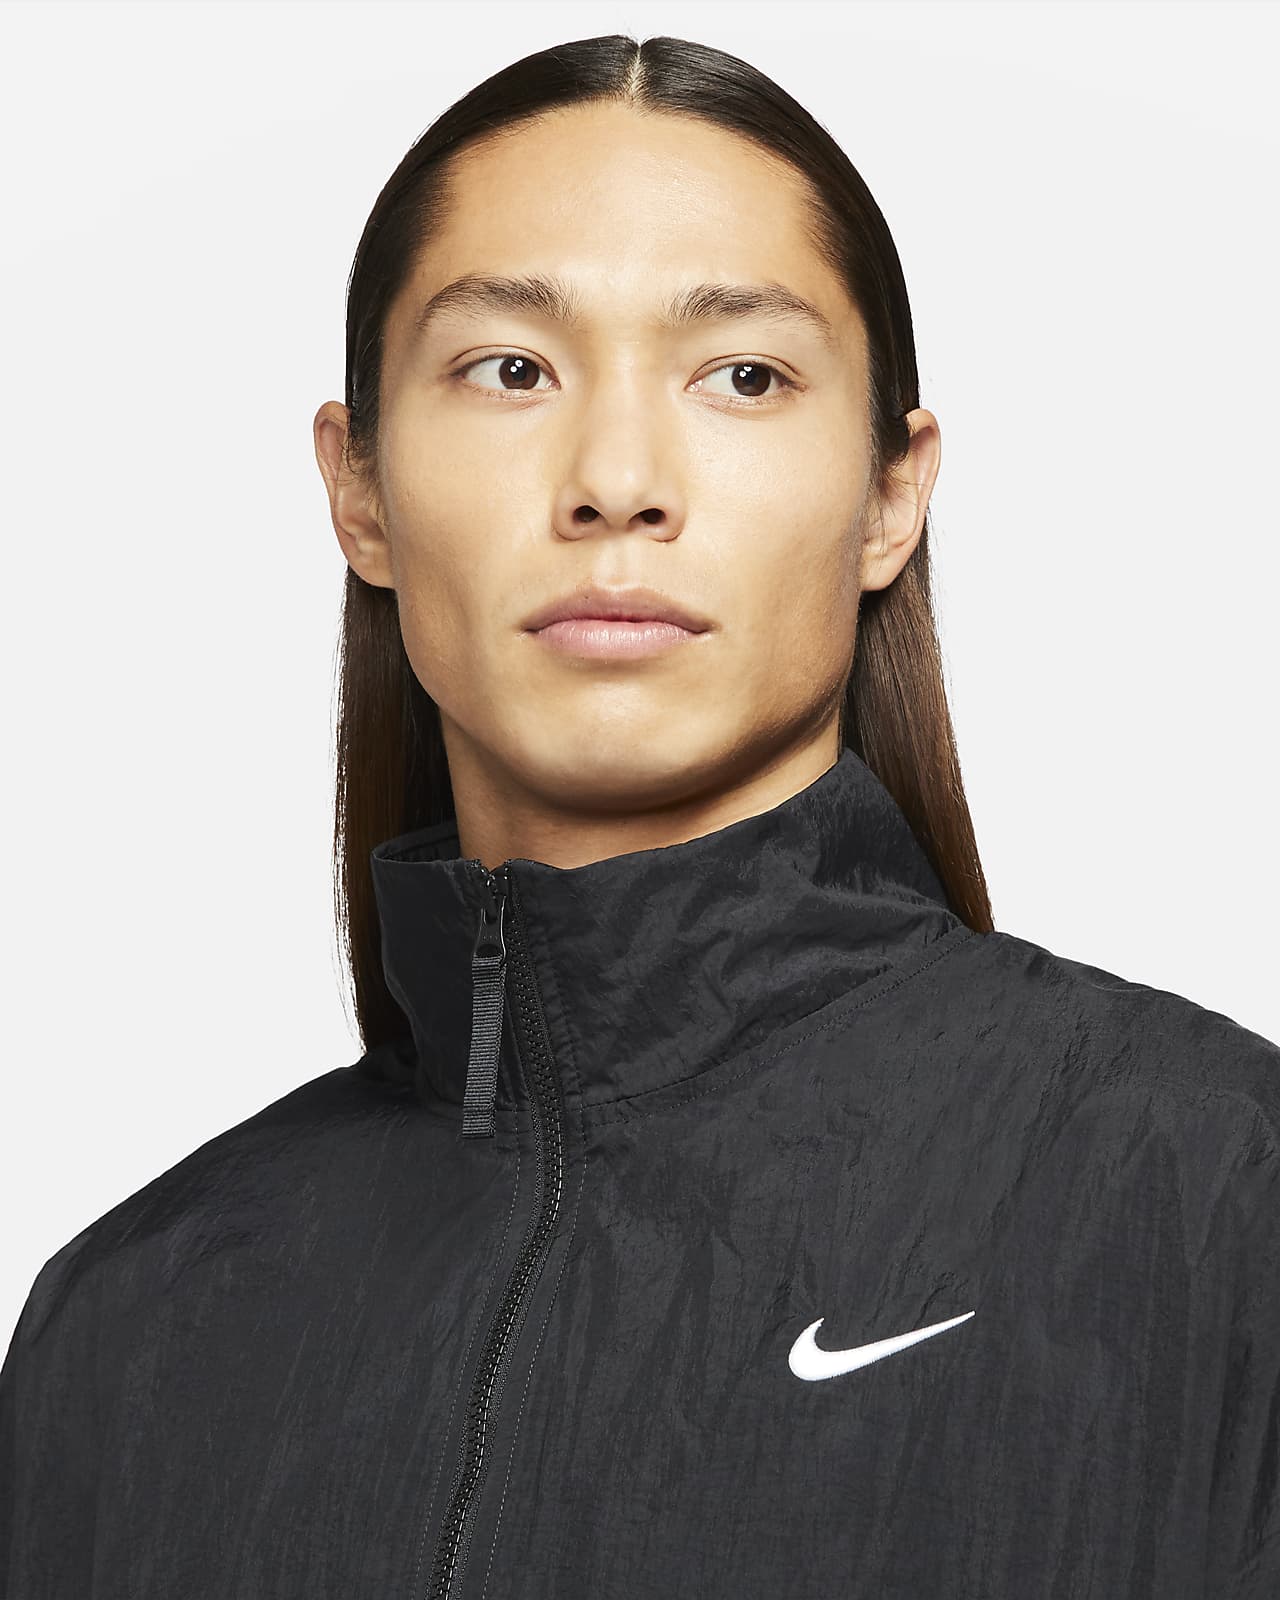 Nike Dri-FIT Men's Basketball Jacket 